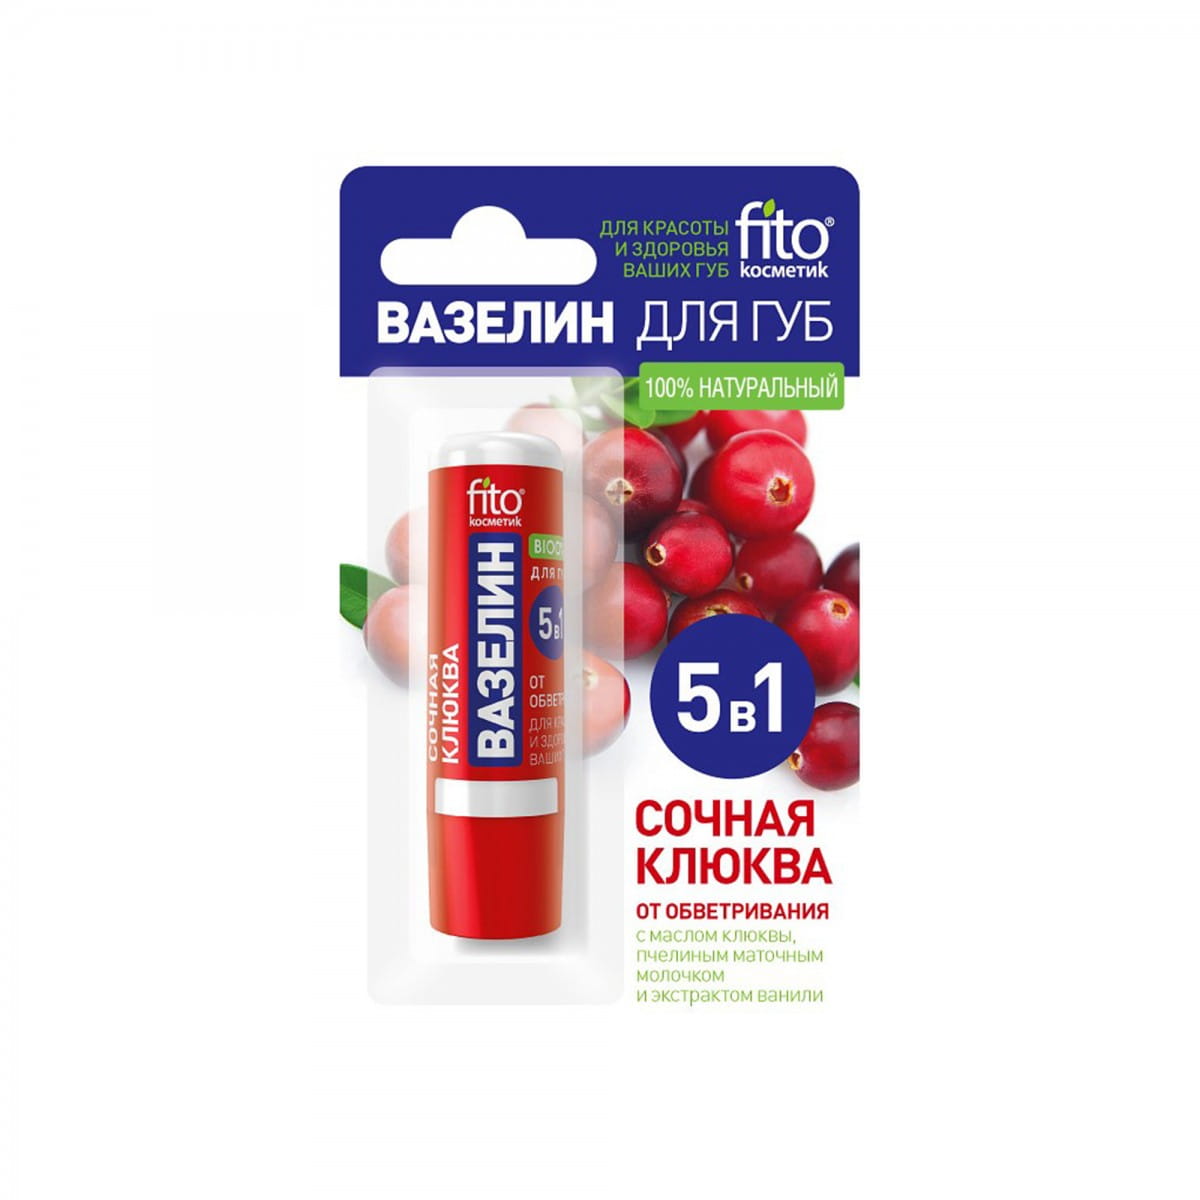 Cranberry-Lippenbalsam 45 g